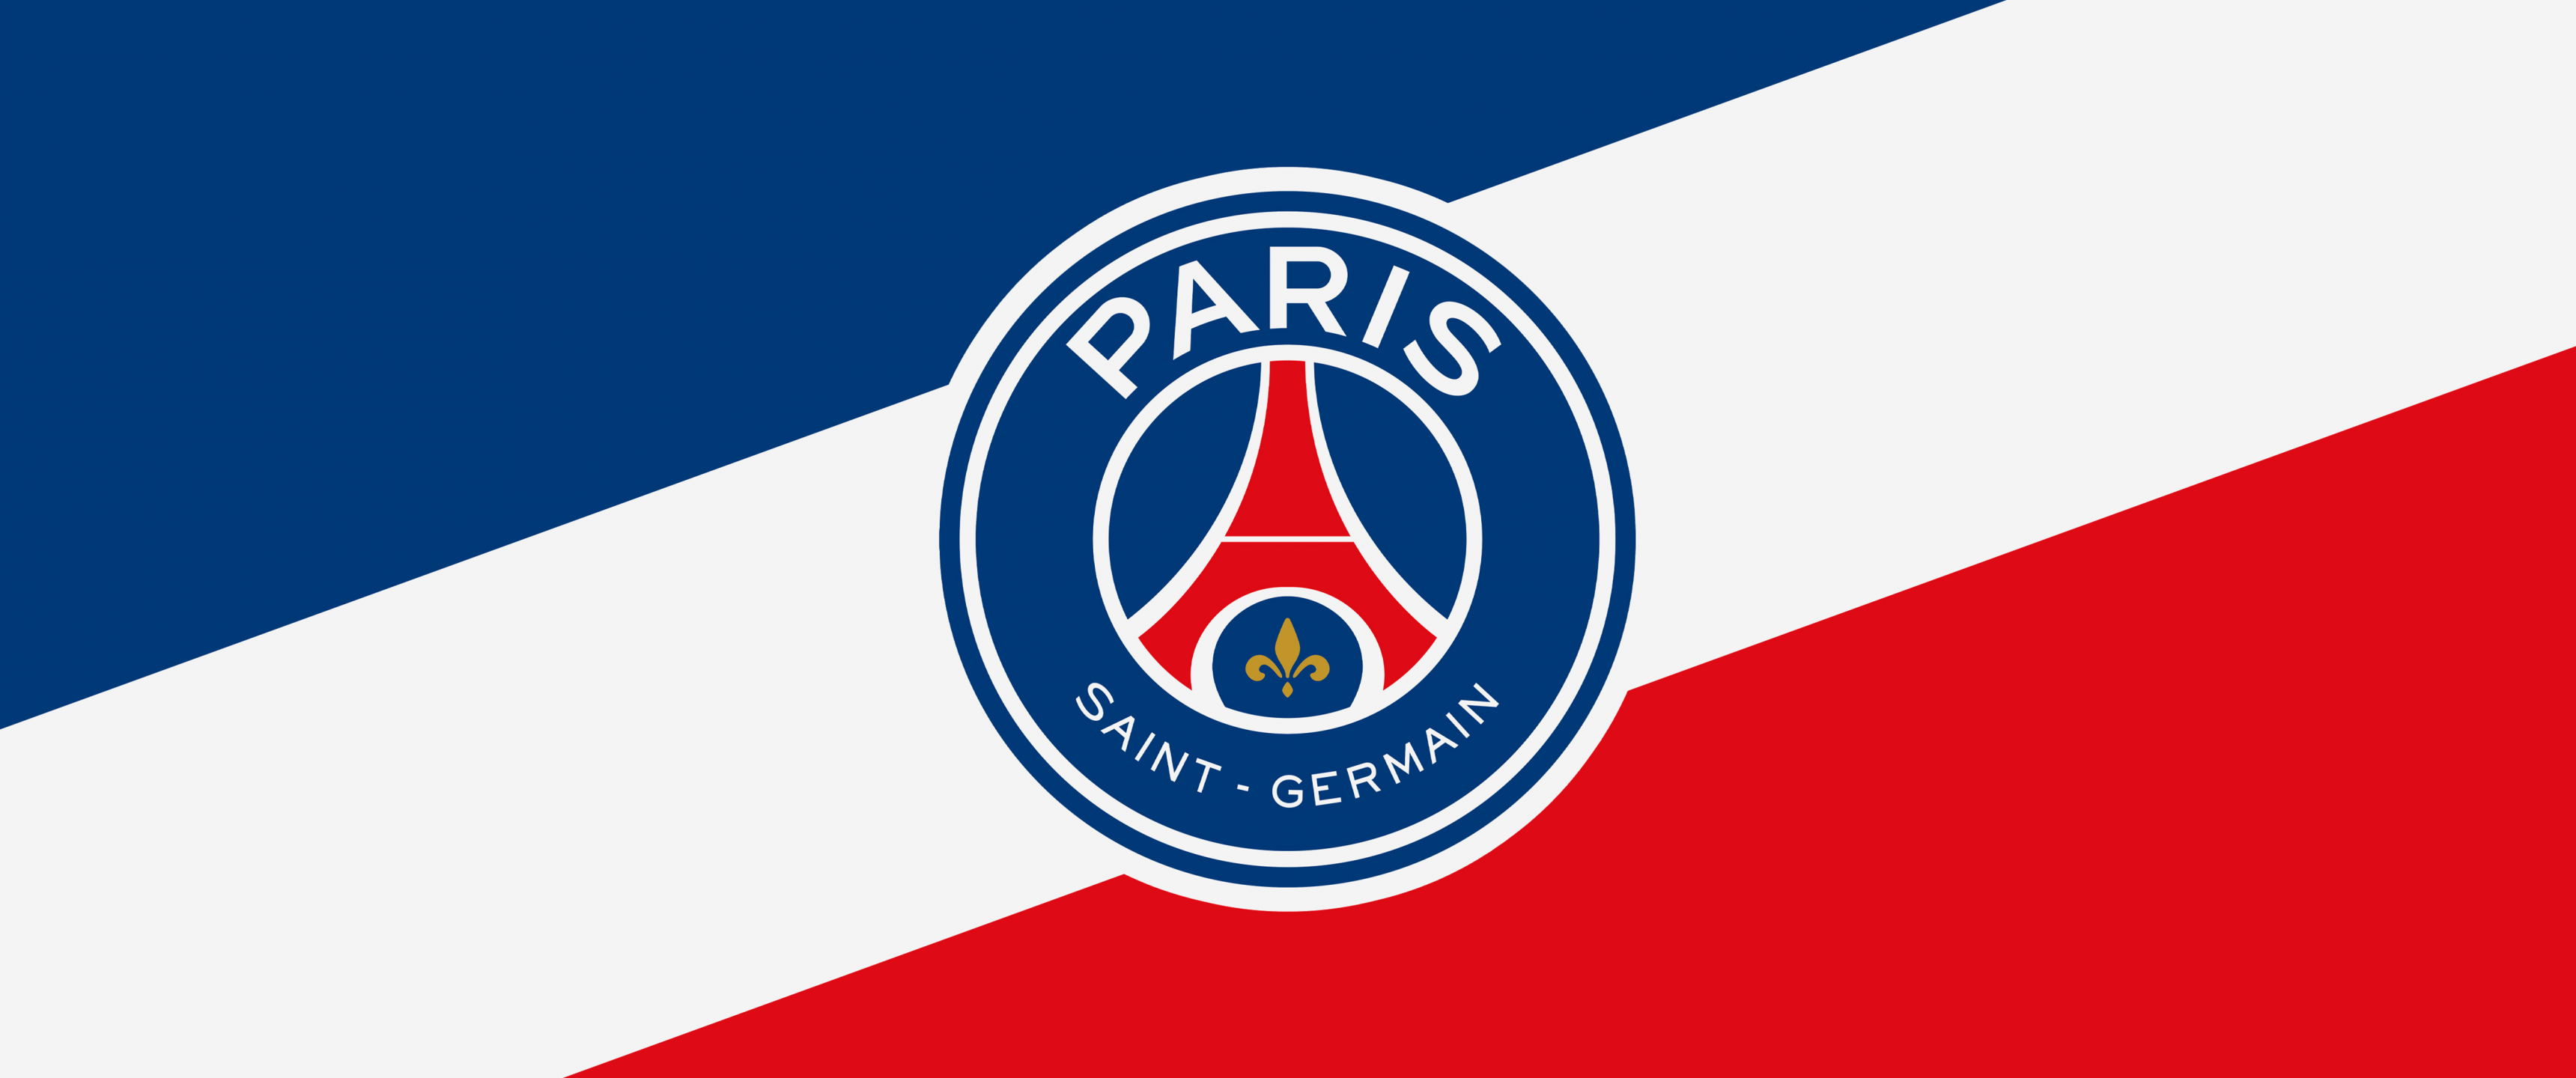 Paris Saint Germain FC Wallpaper 4K, Football Club, 5K, Sports